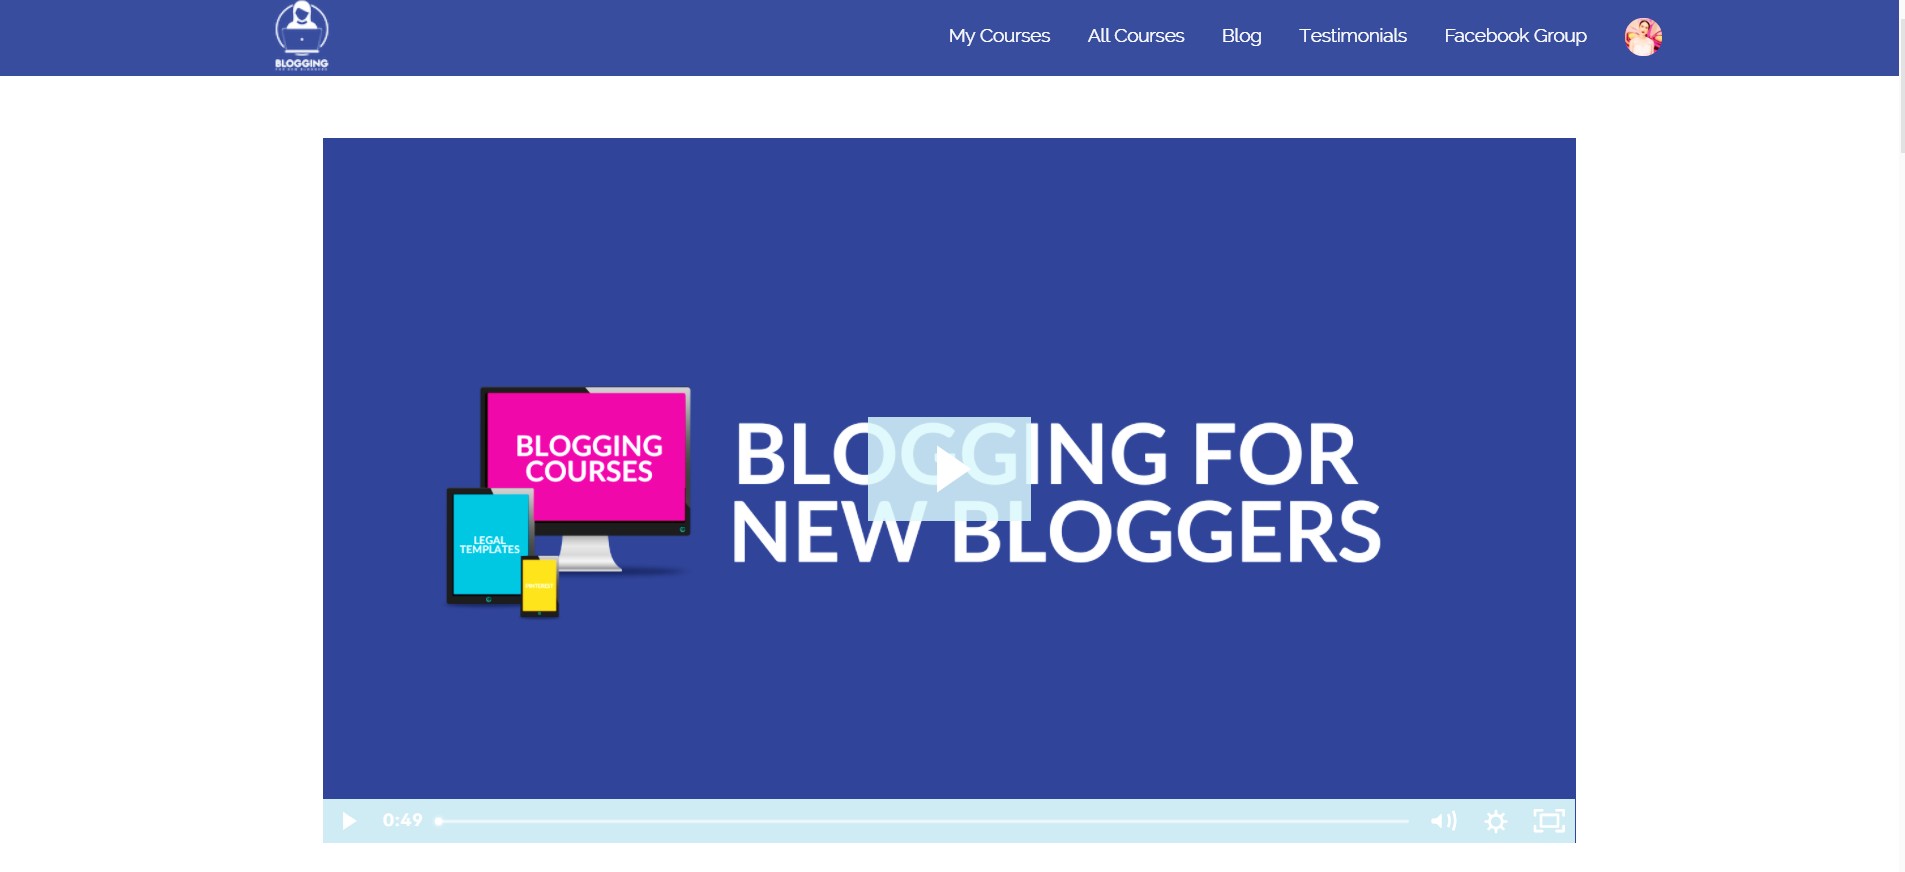 <img src="blogging.jpg" alt="blogging for new bloggers homepage"/> 